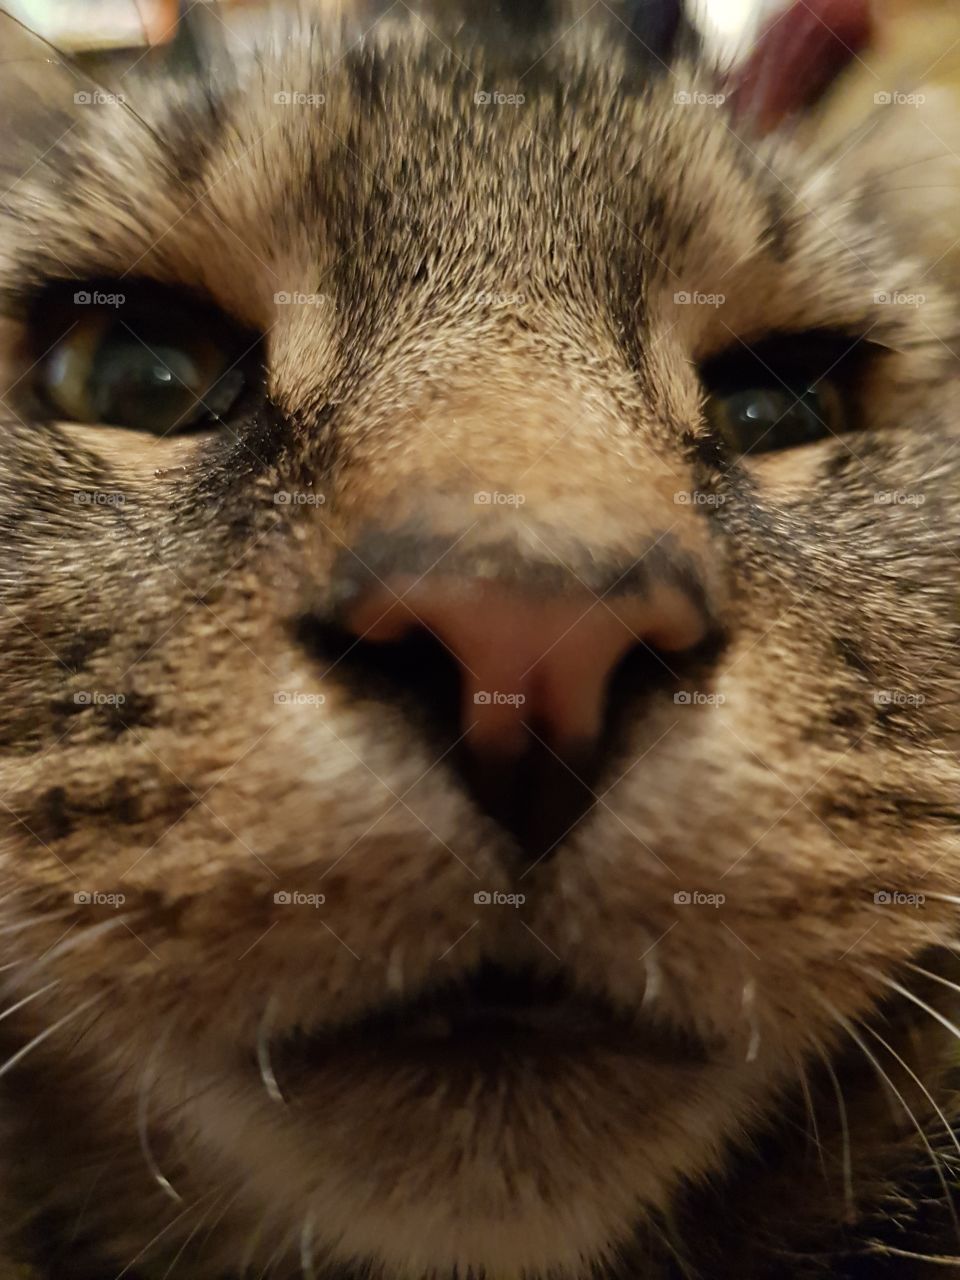 Cute aslan cat close-up